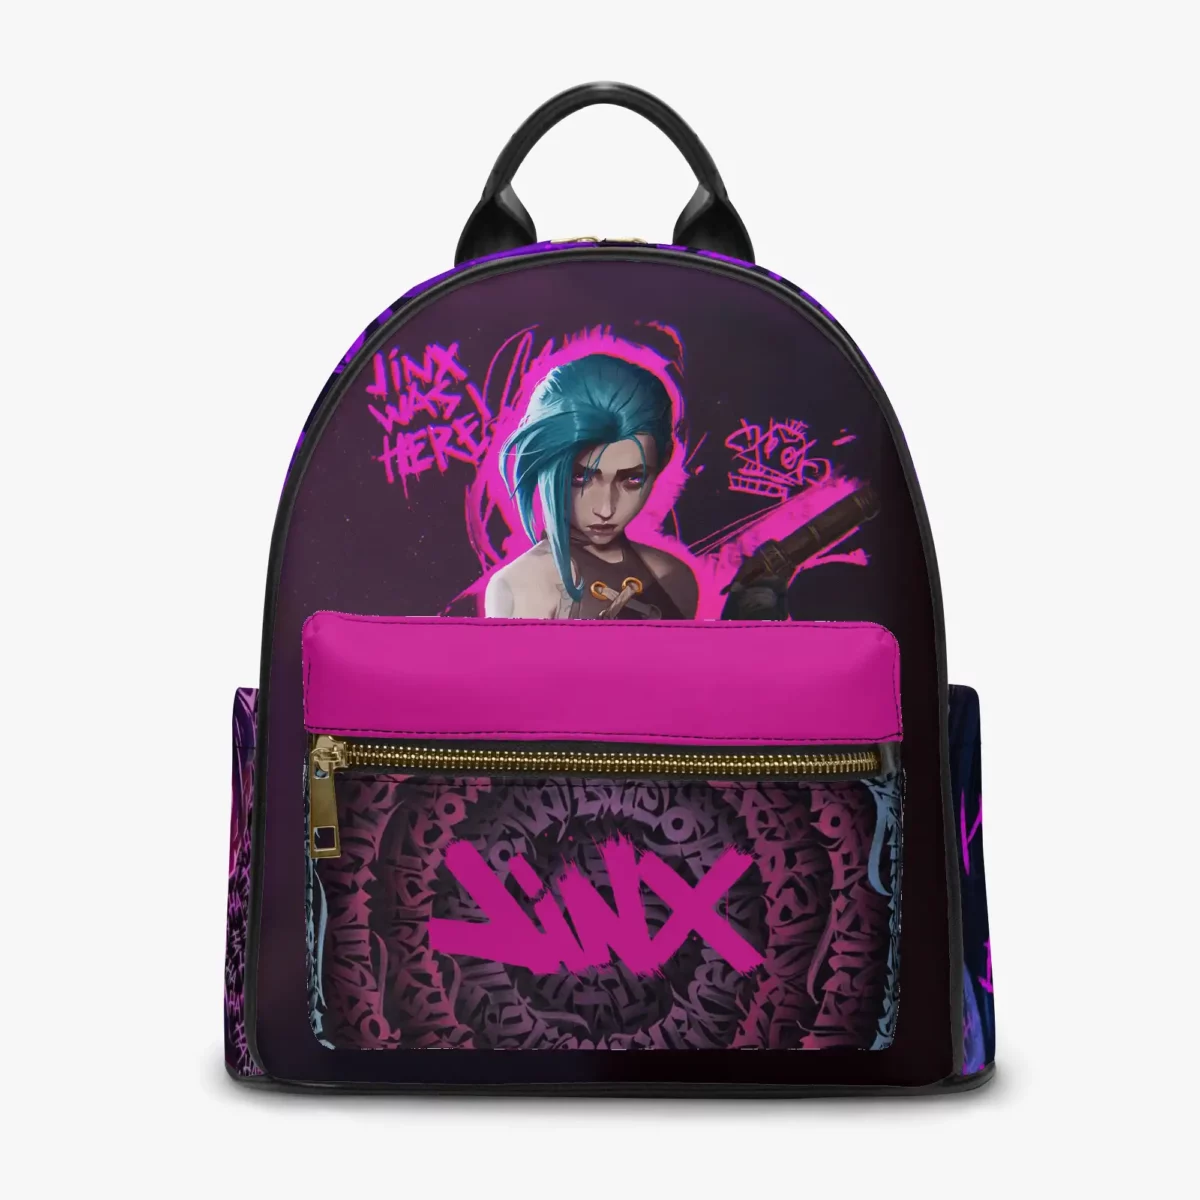 Jinx Character LoL Art Graffiti Style Mini Leather Backpack for Girls/Youth Cool Kiddo 24